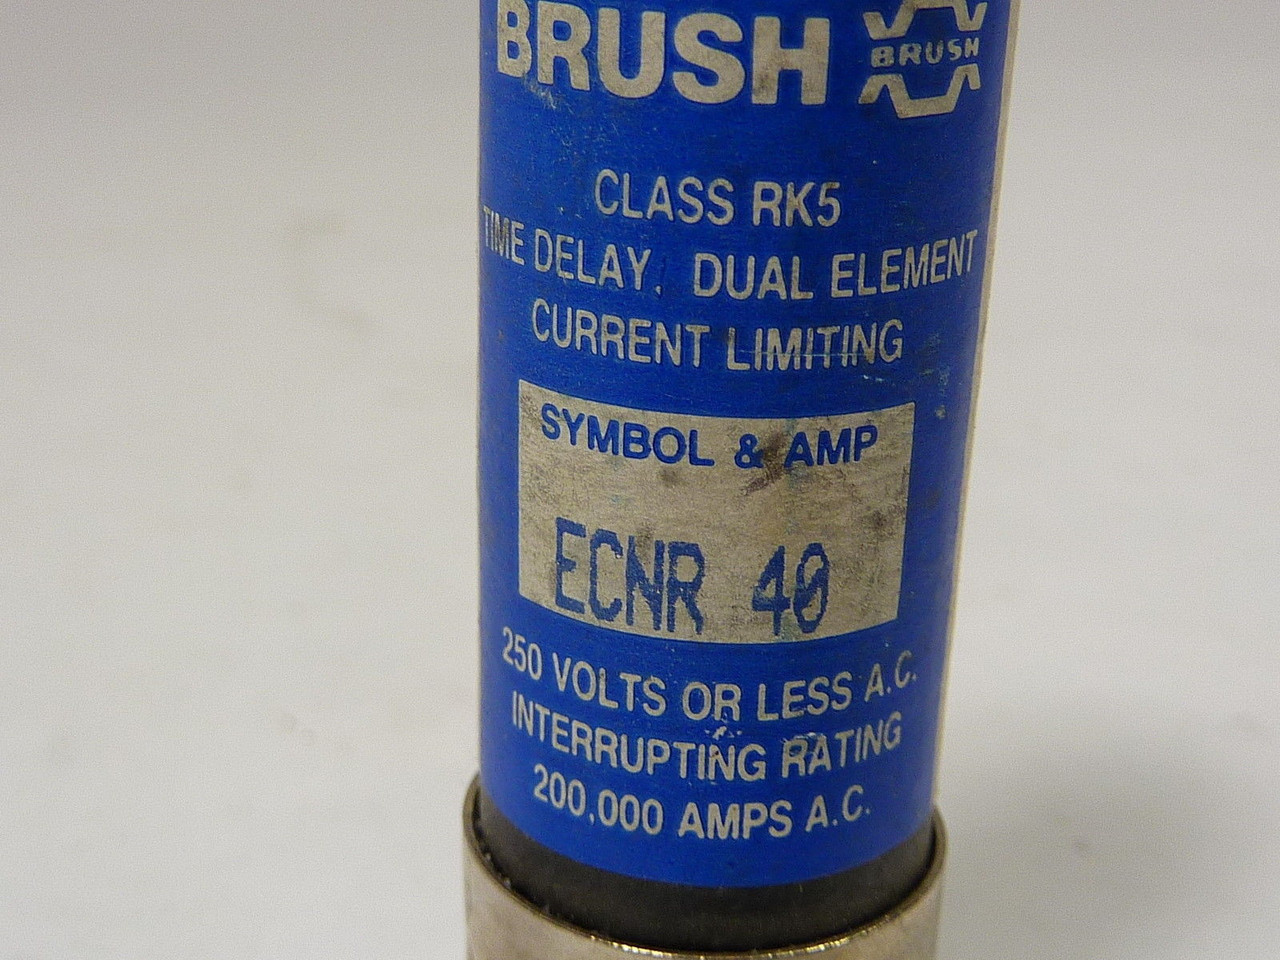 Brush ECNR-40 Time Delay Fuse 40A 250V USED